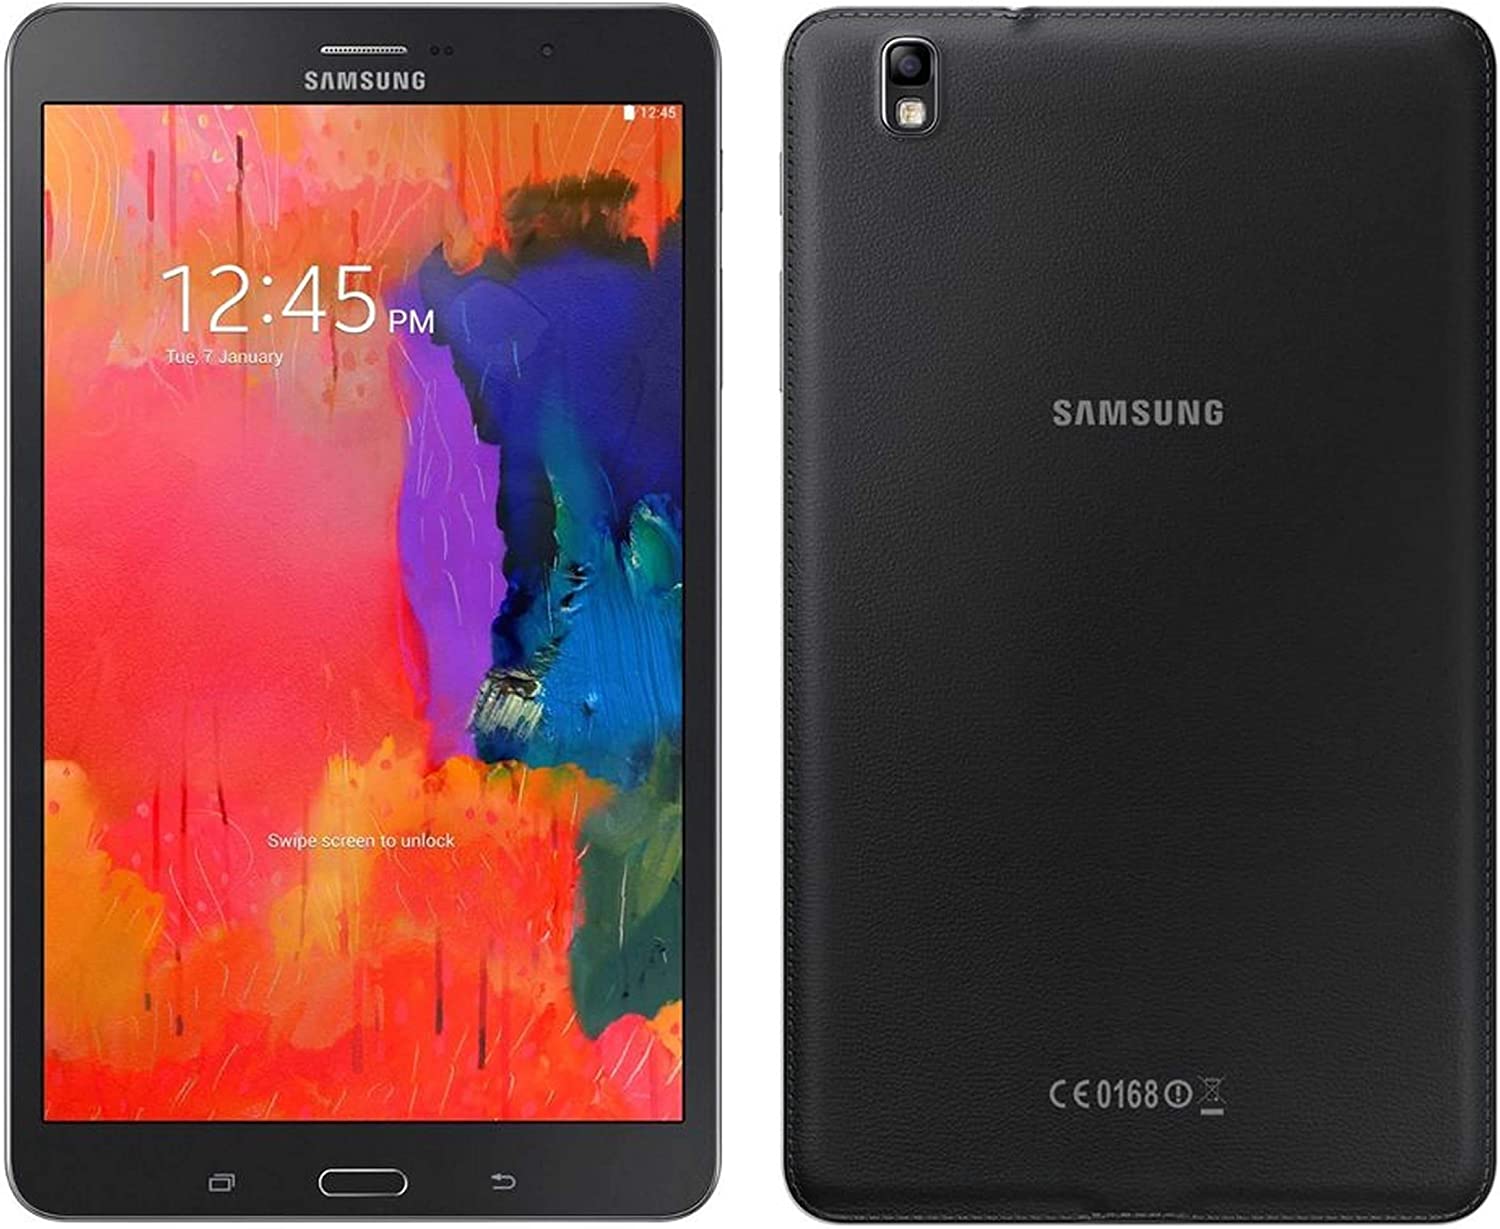 Samsung Galaxy Tab 8.4 3G/LTE Black 32GB 2GB RAM Qualcomm Snapdragon 800 8.4 inches Tablet DISPLAY 8.4-Inches (1600x2560) PROCESSOR Qualcomm Snapdragon 800 FRONT 2MP REAR CAMERA 8MP 2GB STORAGE